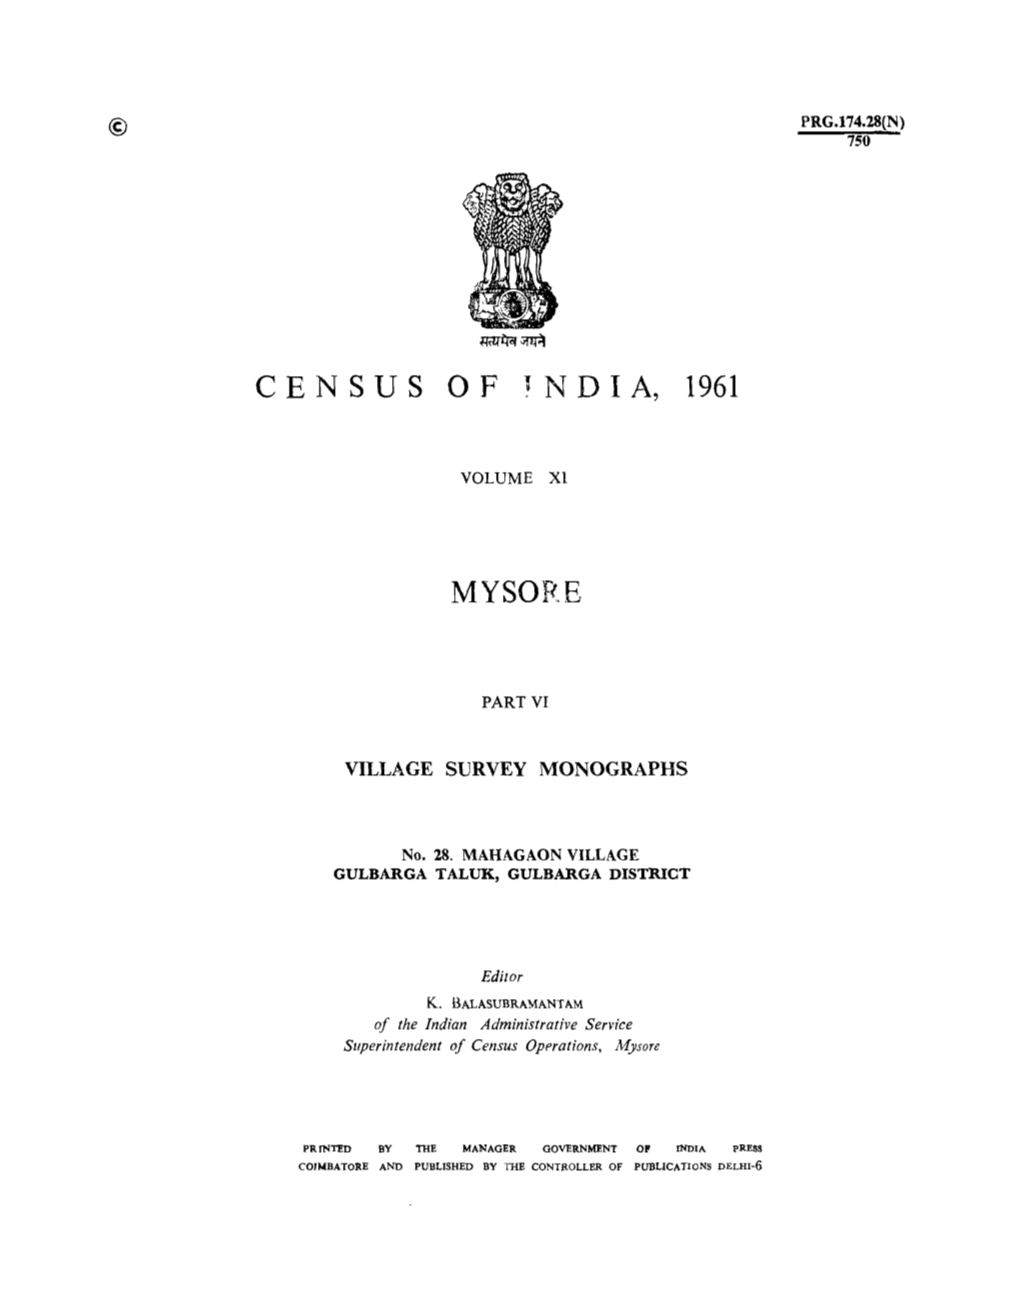 Village Survey Monographs, Mahagaon Village, No-28, Part VI